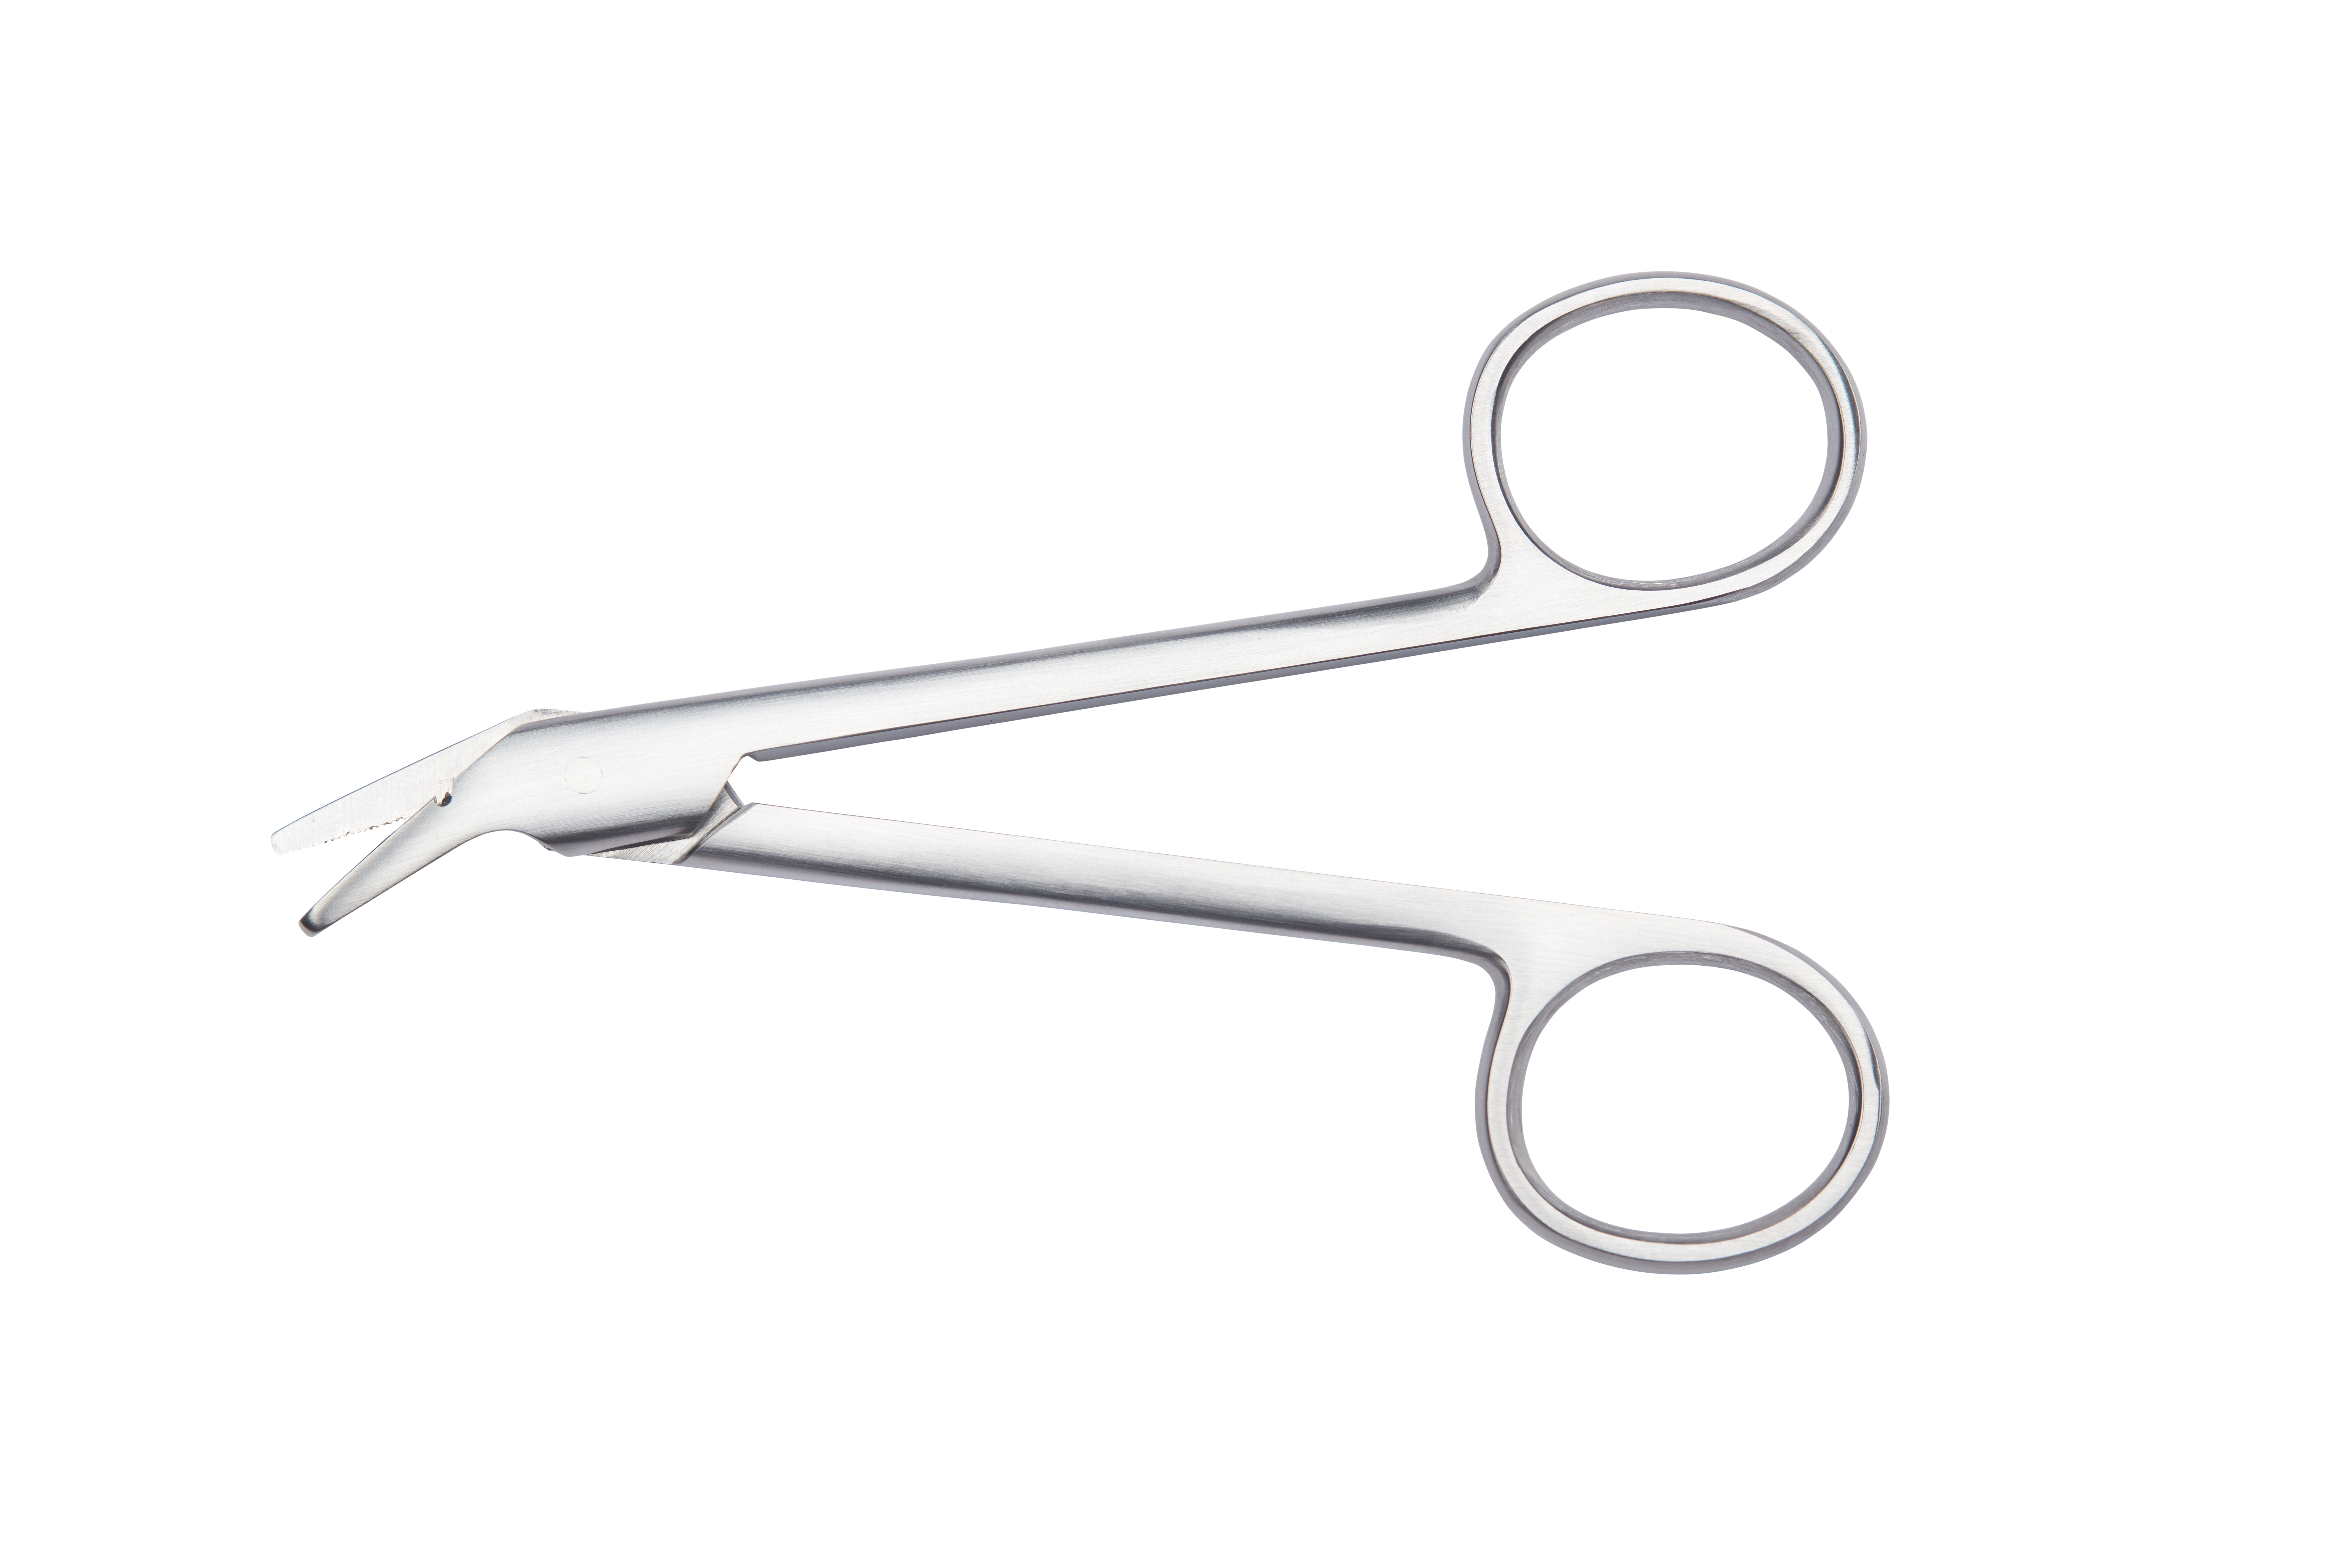 https://dtrmedical.com/wp-content/uploads/2014/10/Wire-Cutting-Scissors-Hardened.jpg